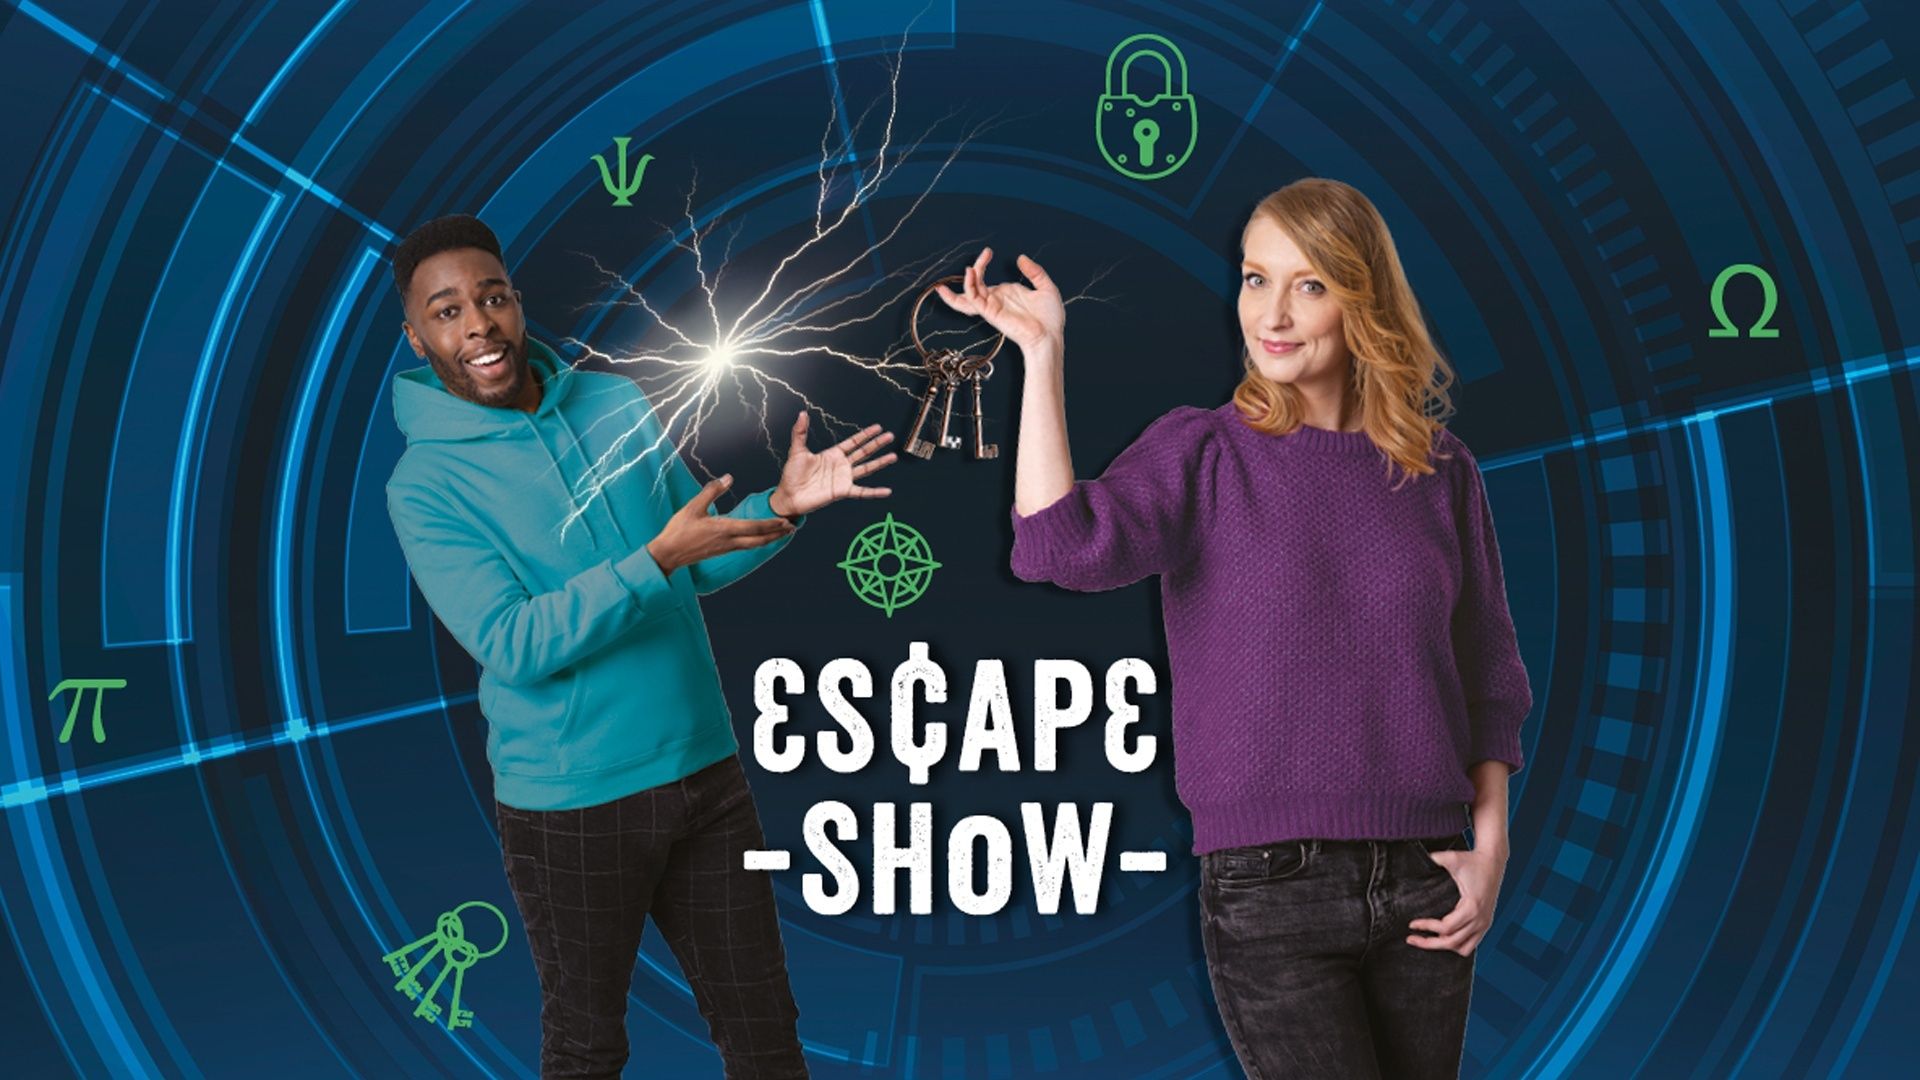 Escape show